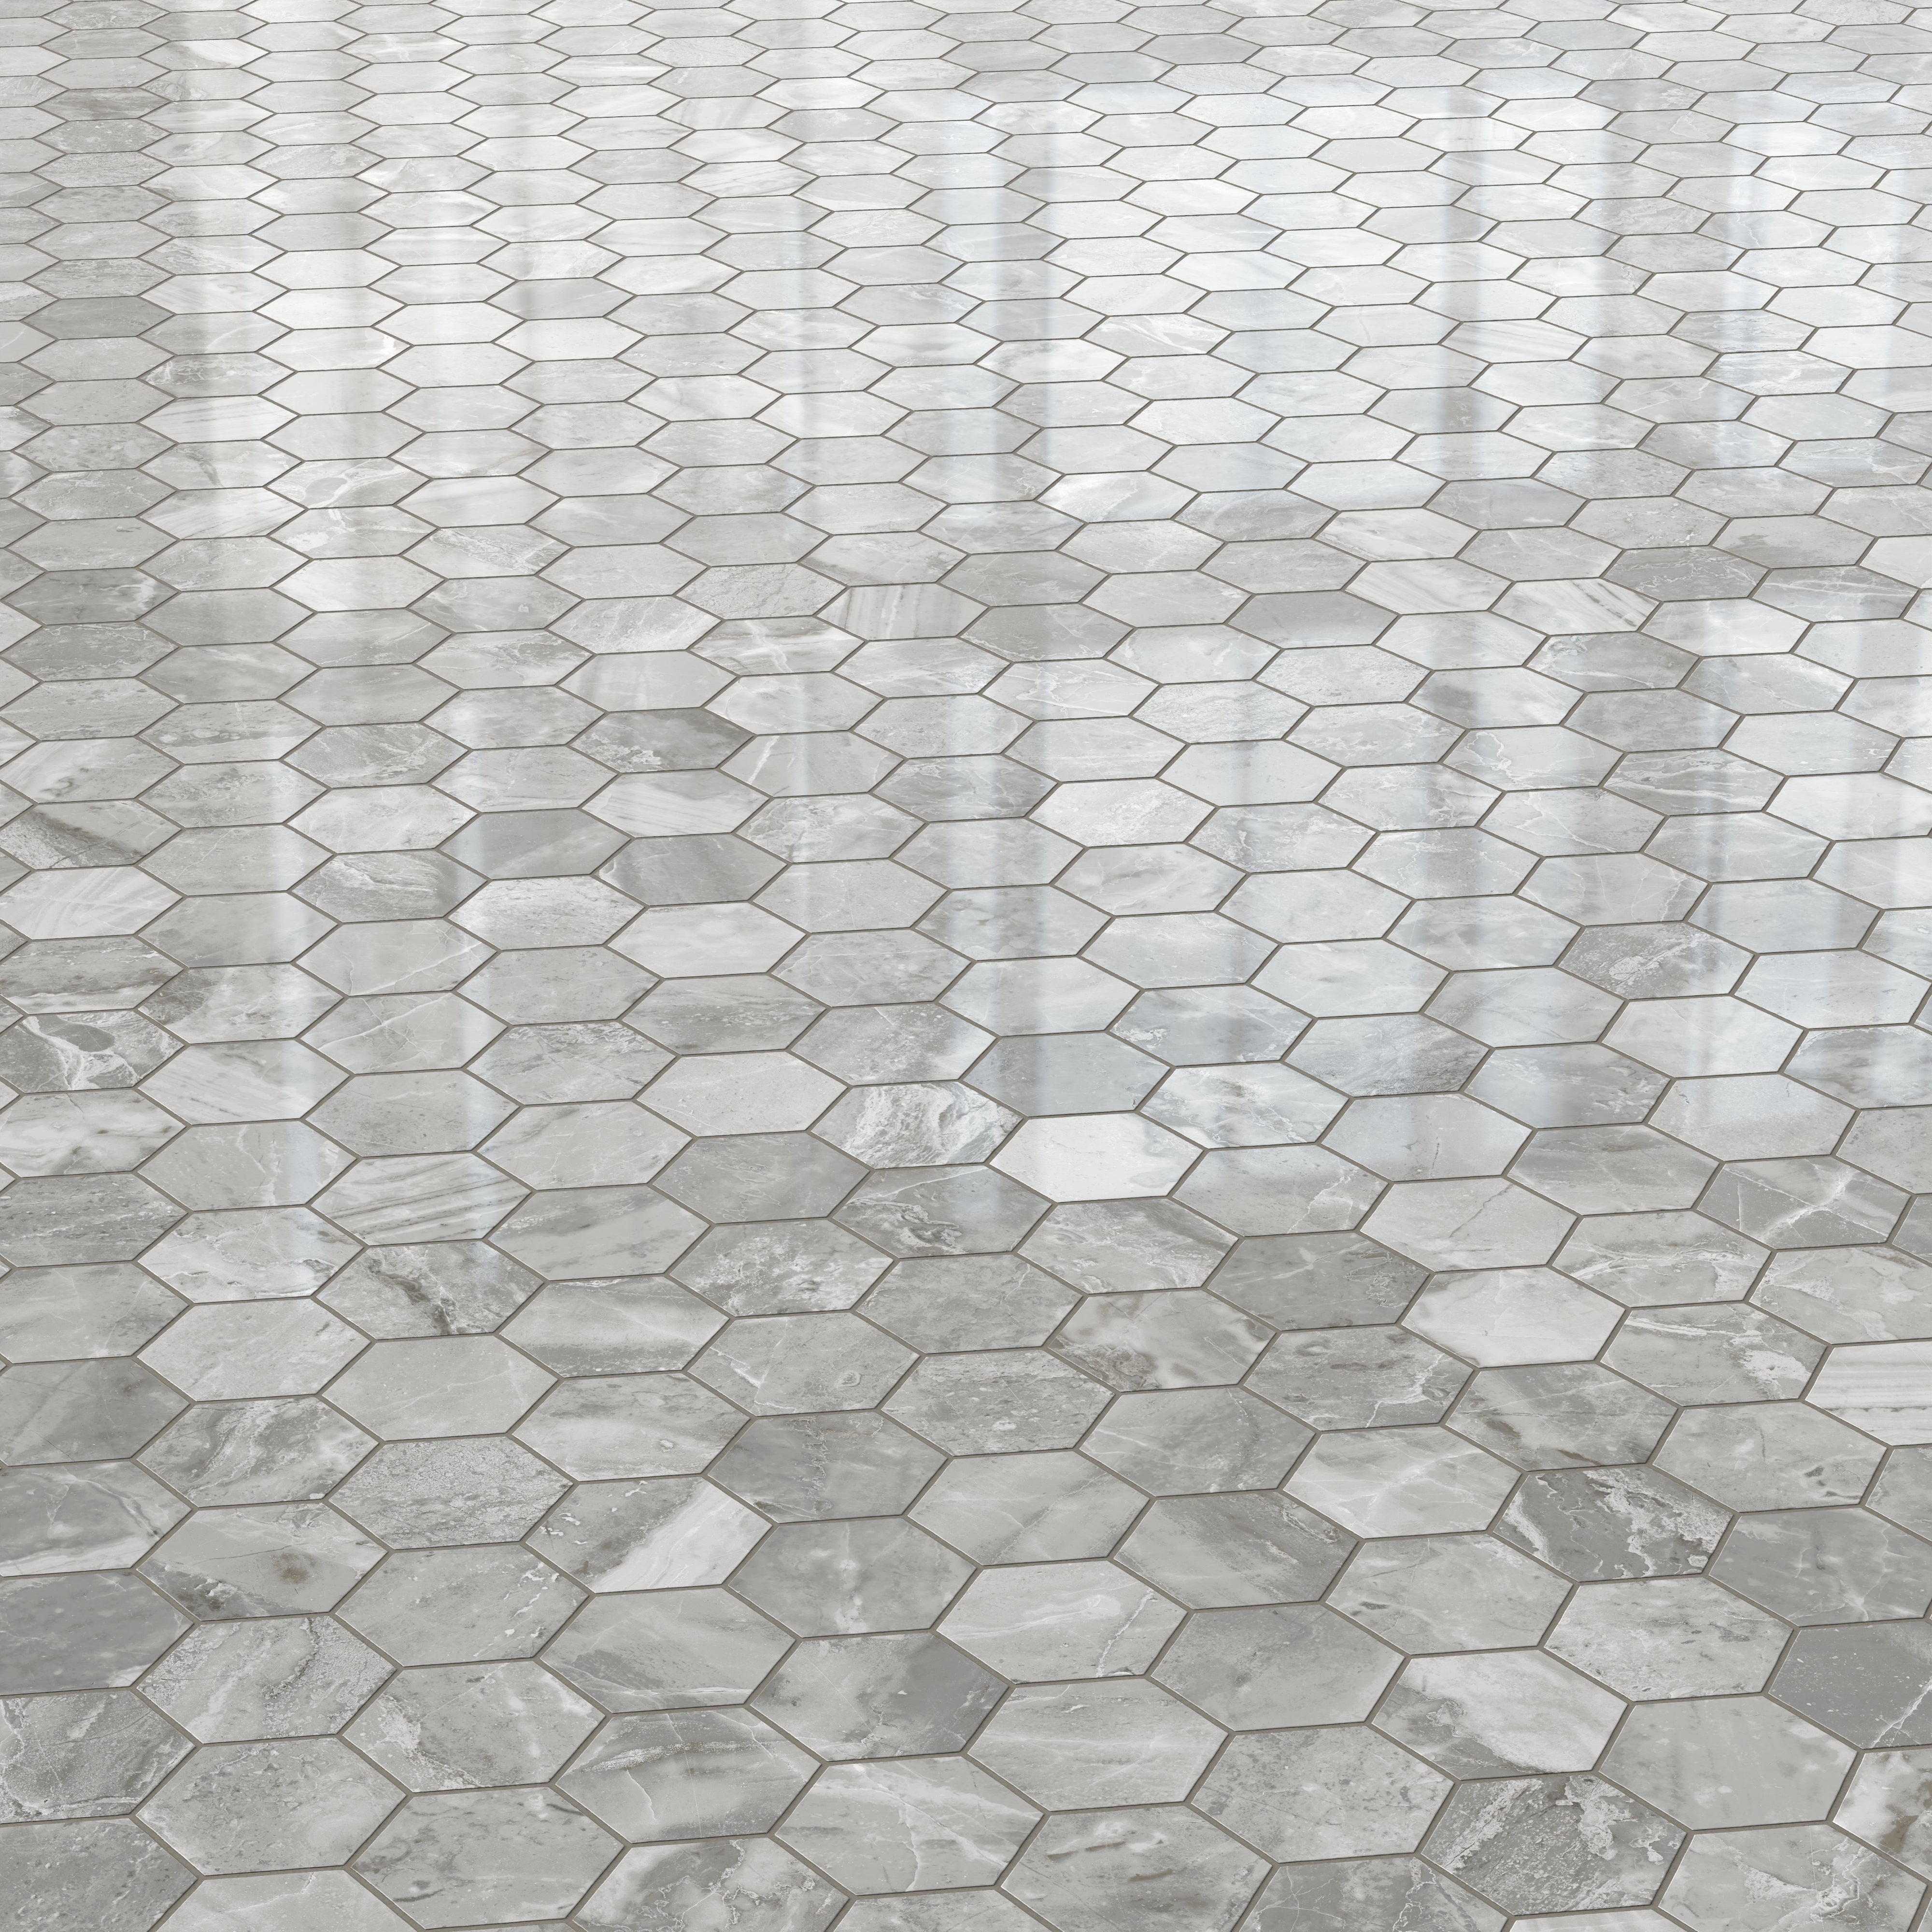 Blair 3x3 Polished Porcelain Hexagon Mosaic Tile in Oniciata Grey